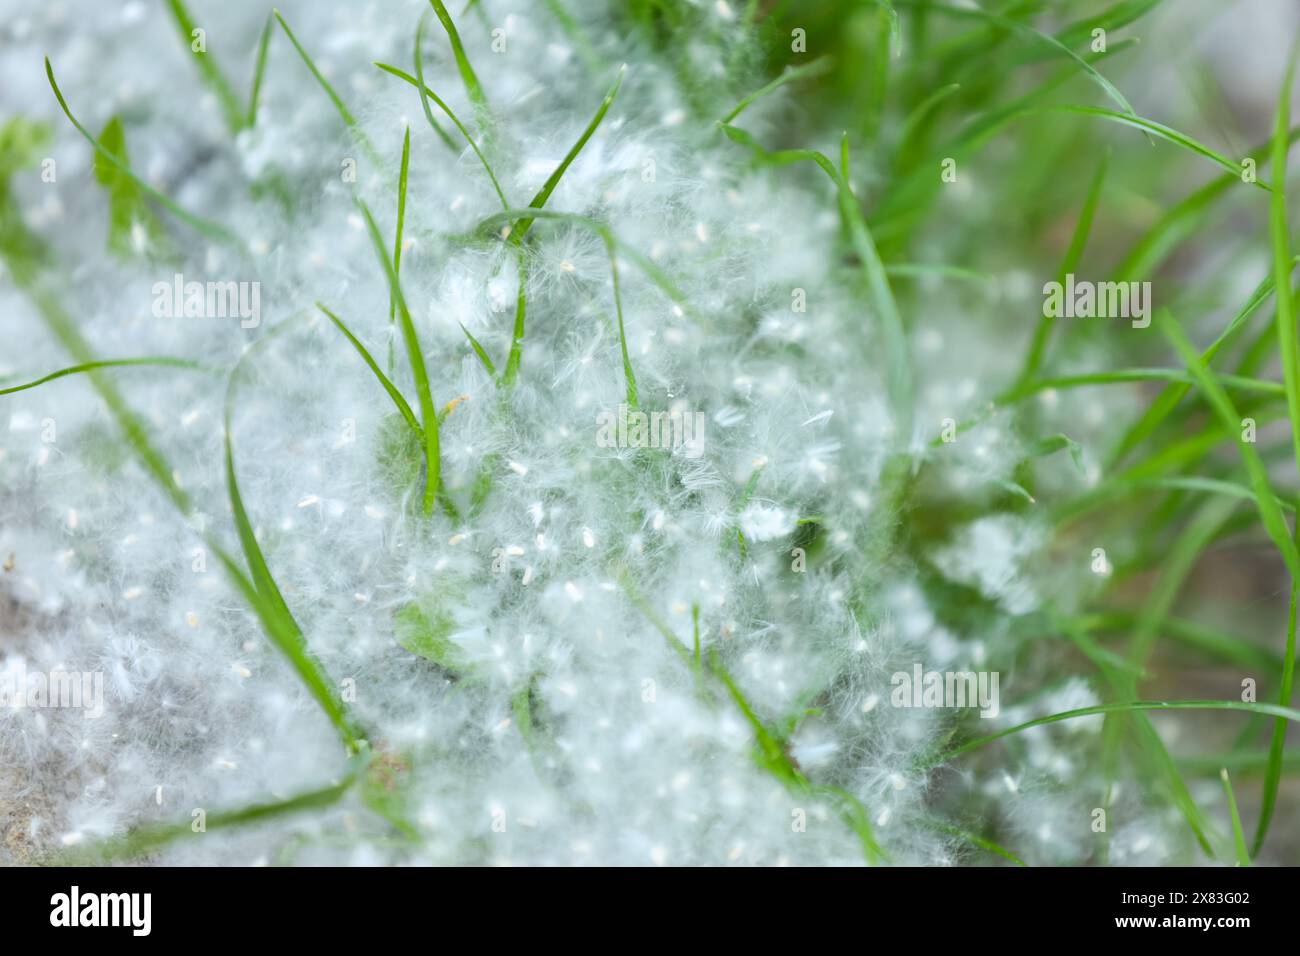 Fluffy poplar seeds cover green grass. Close-up, selectiv focus, horizontal. Stock Photo